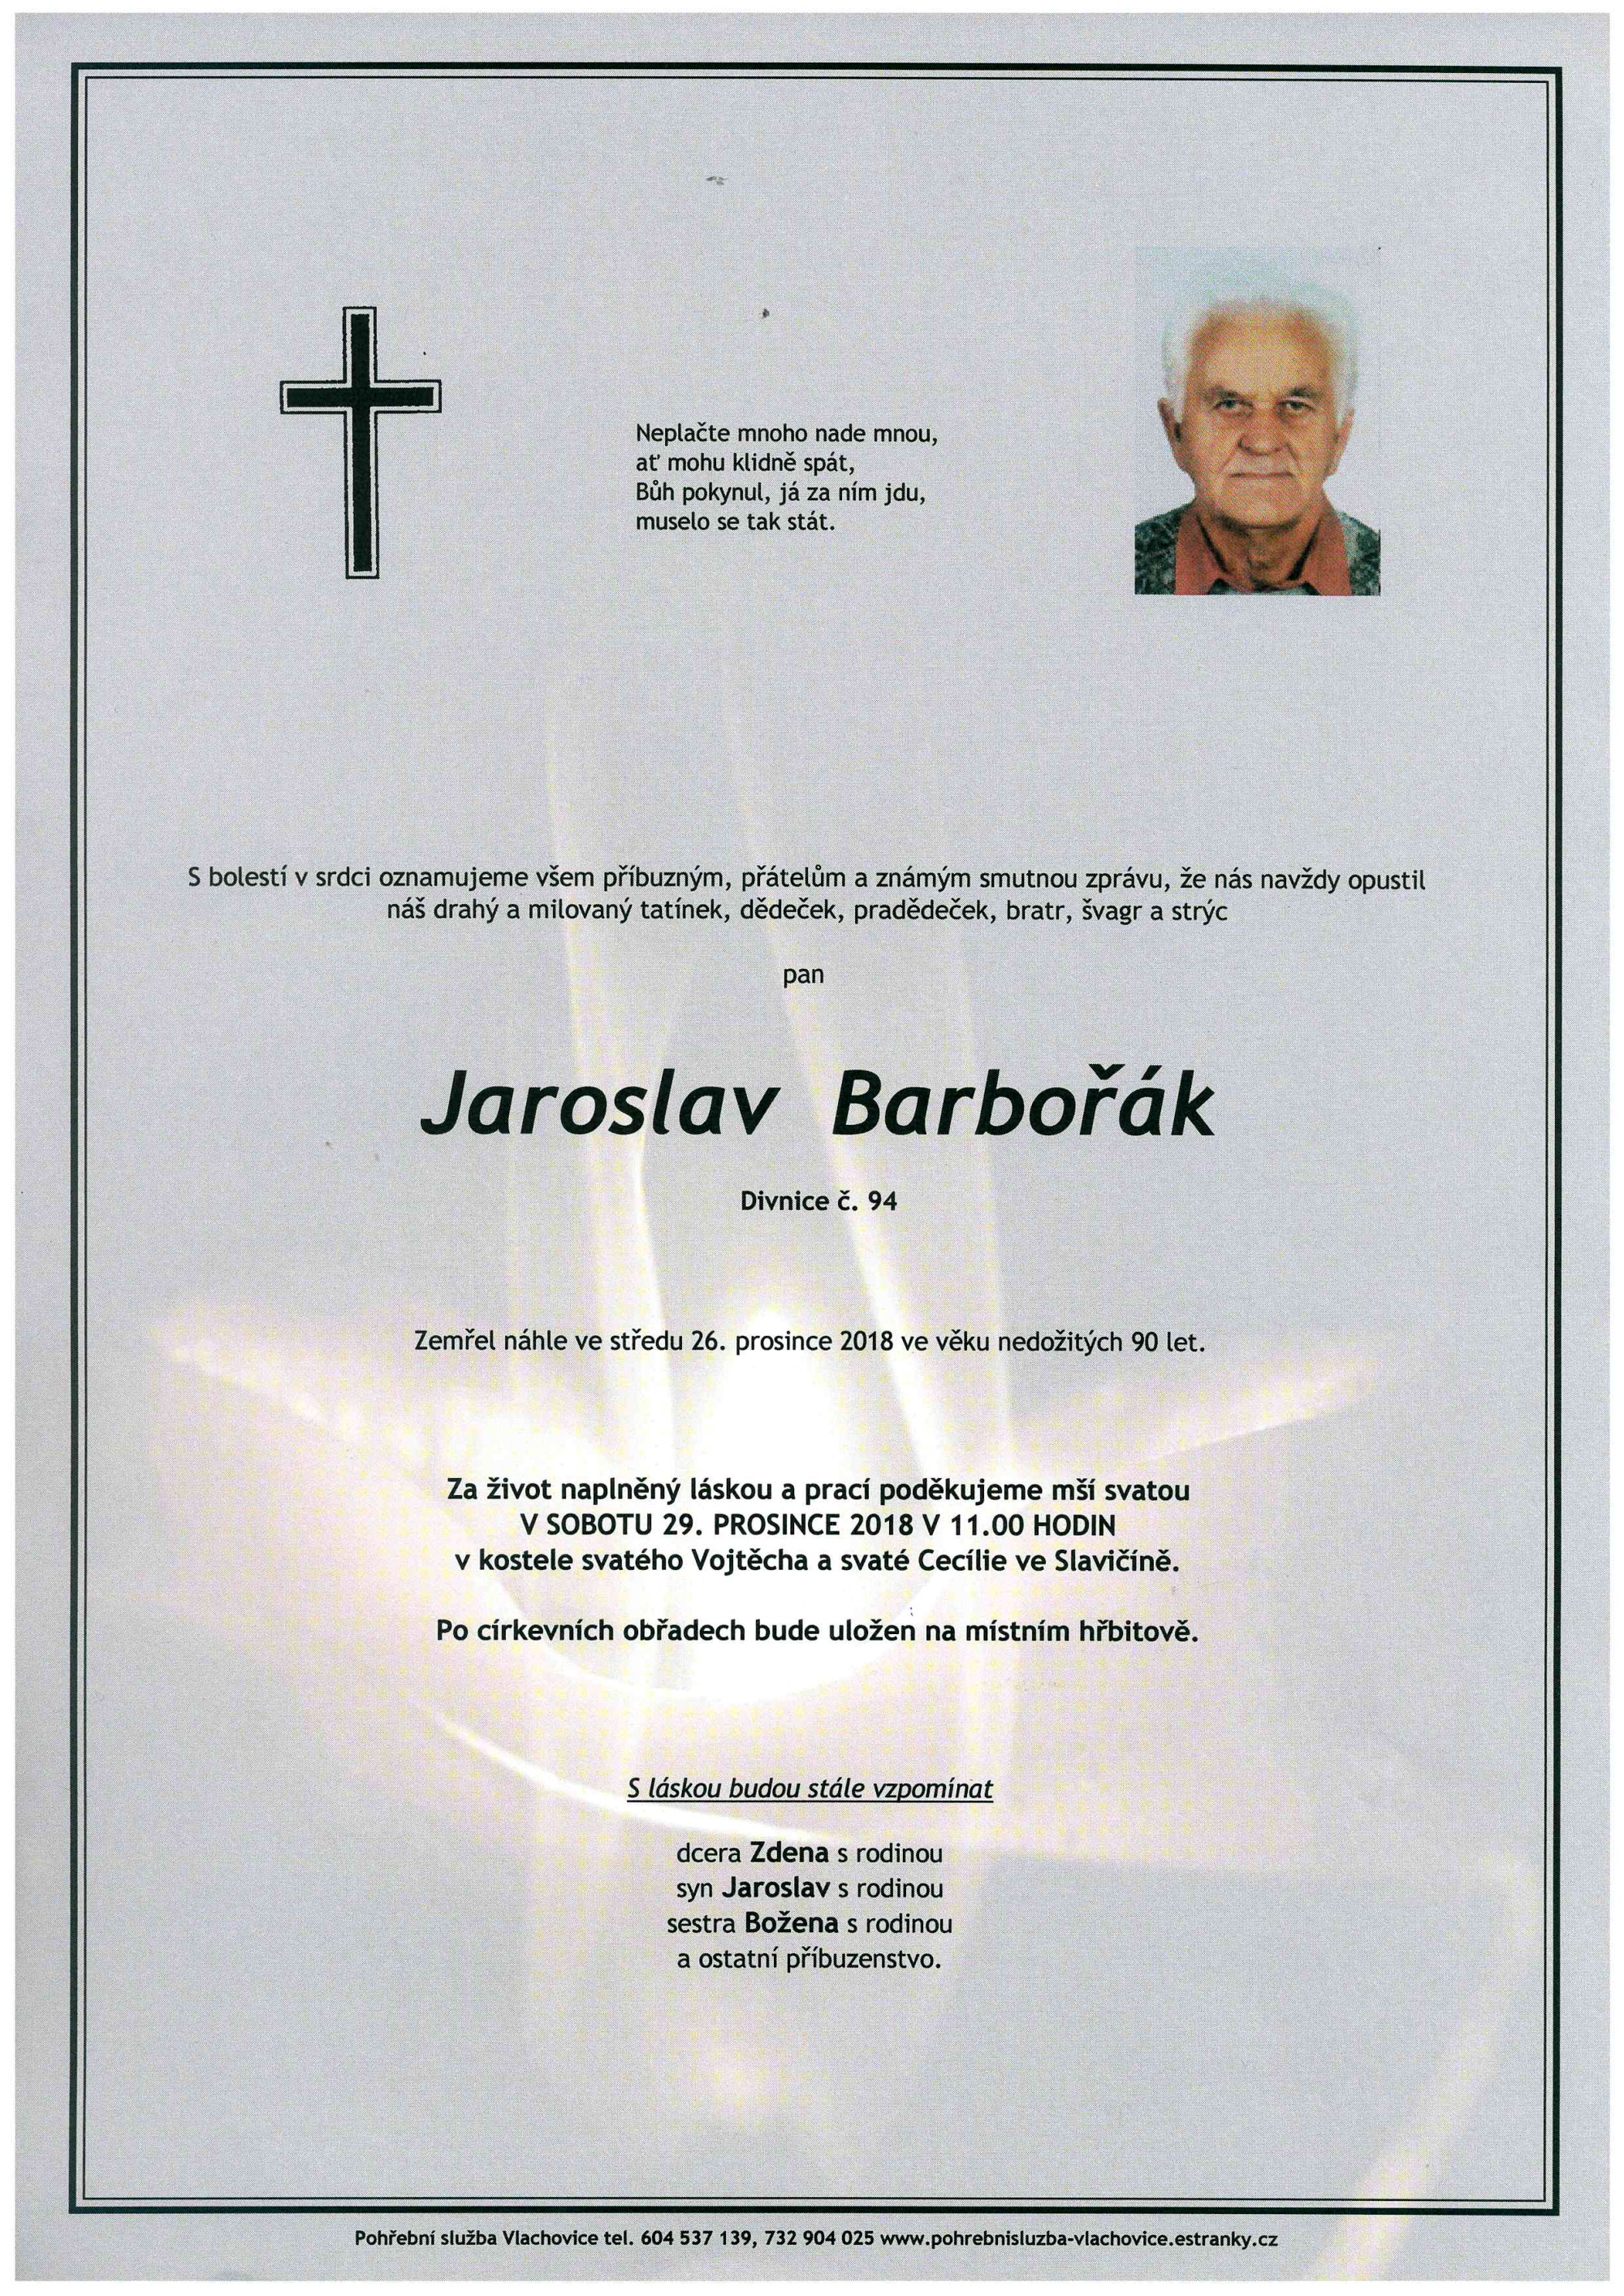 Jaroslav Barbořák